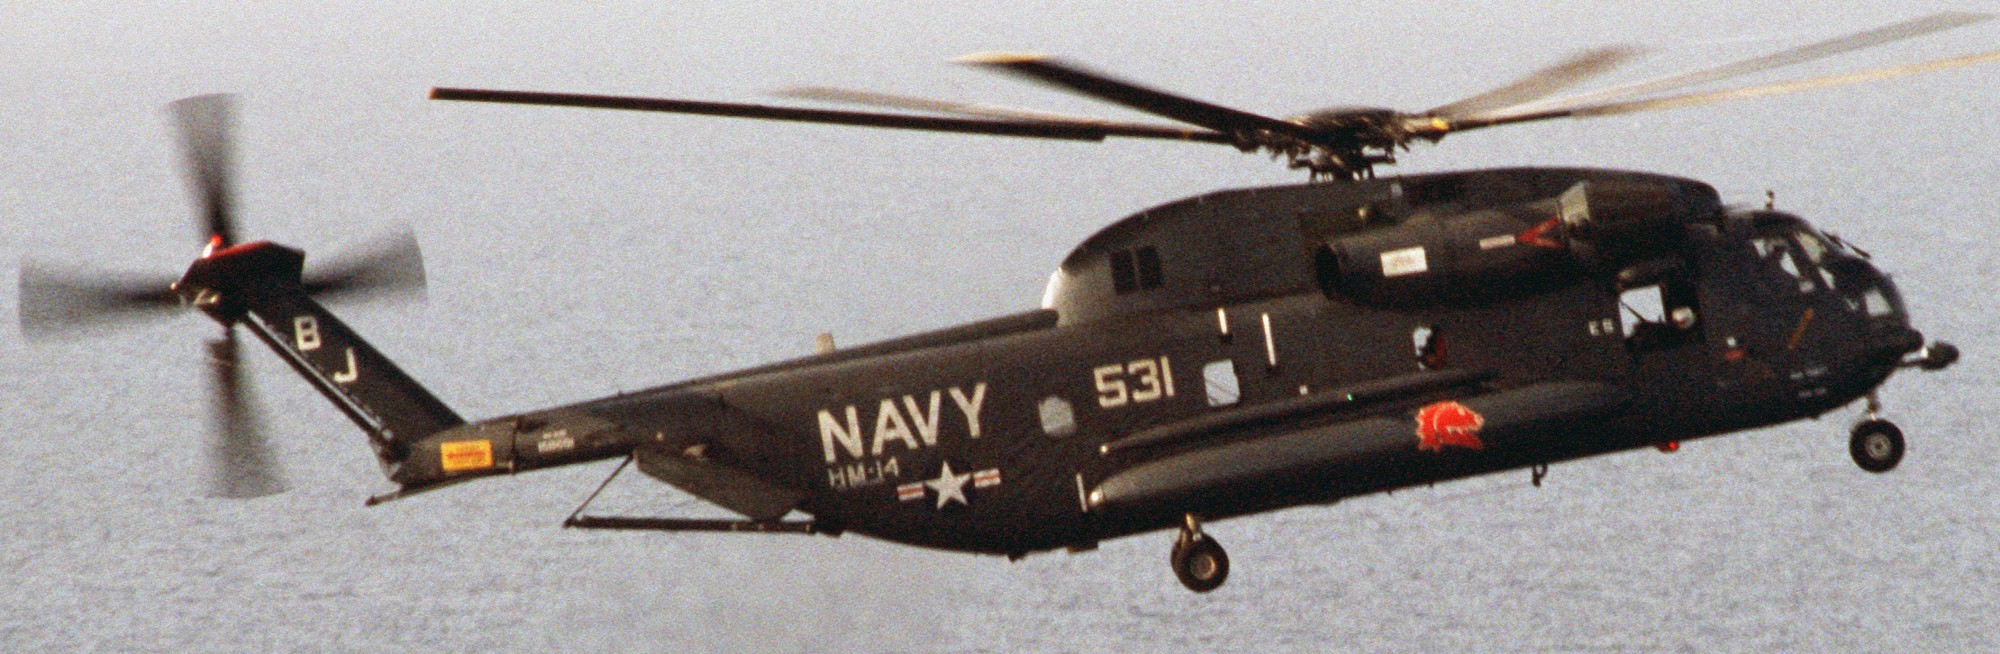 hm-14 vanguard helicopter mine countermeasures squadron navy rh-53d sea stallion 84